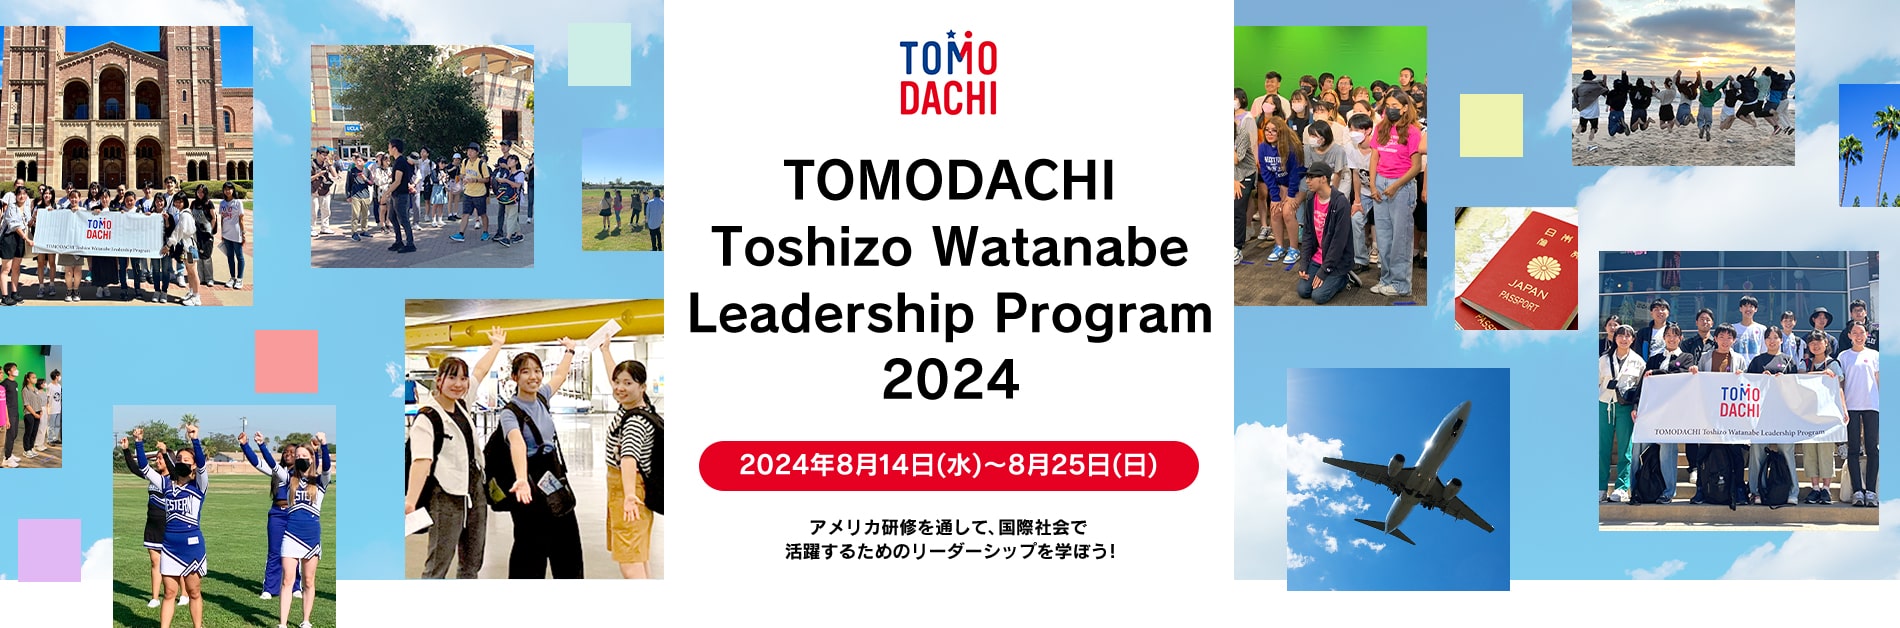 TOMODACHI Toshizo Watanabe Leadership Program 2022